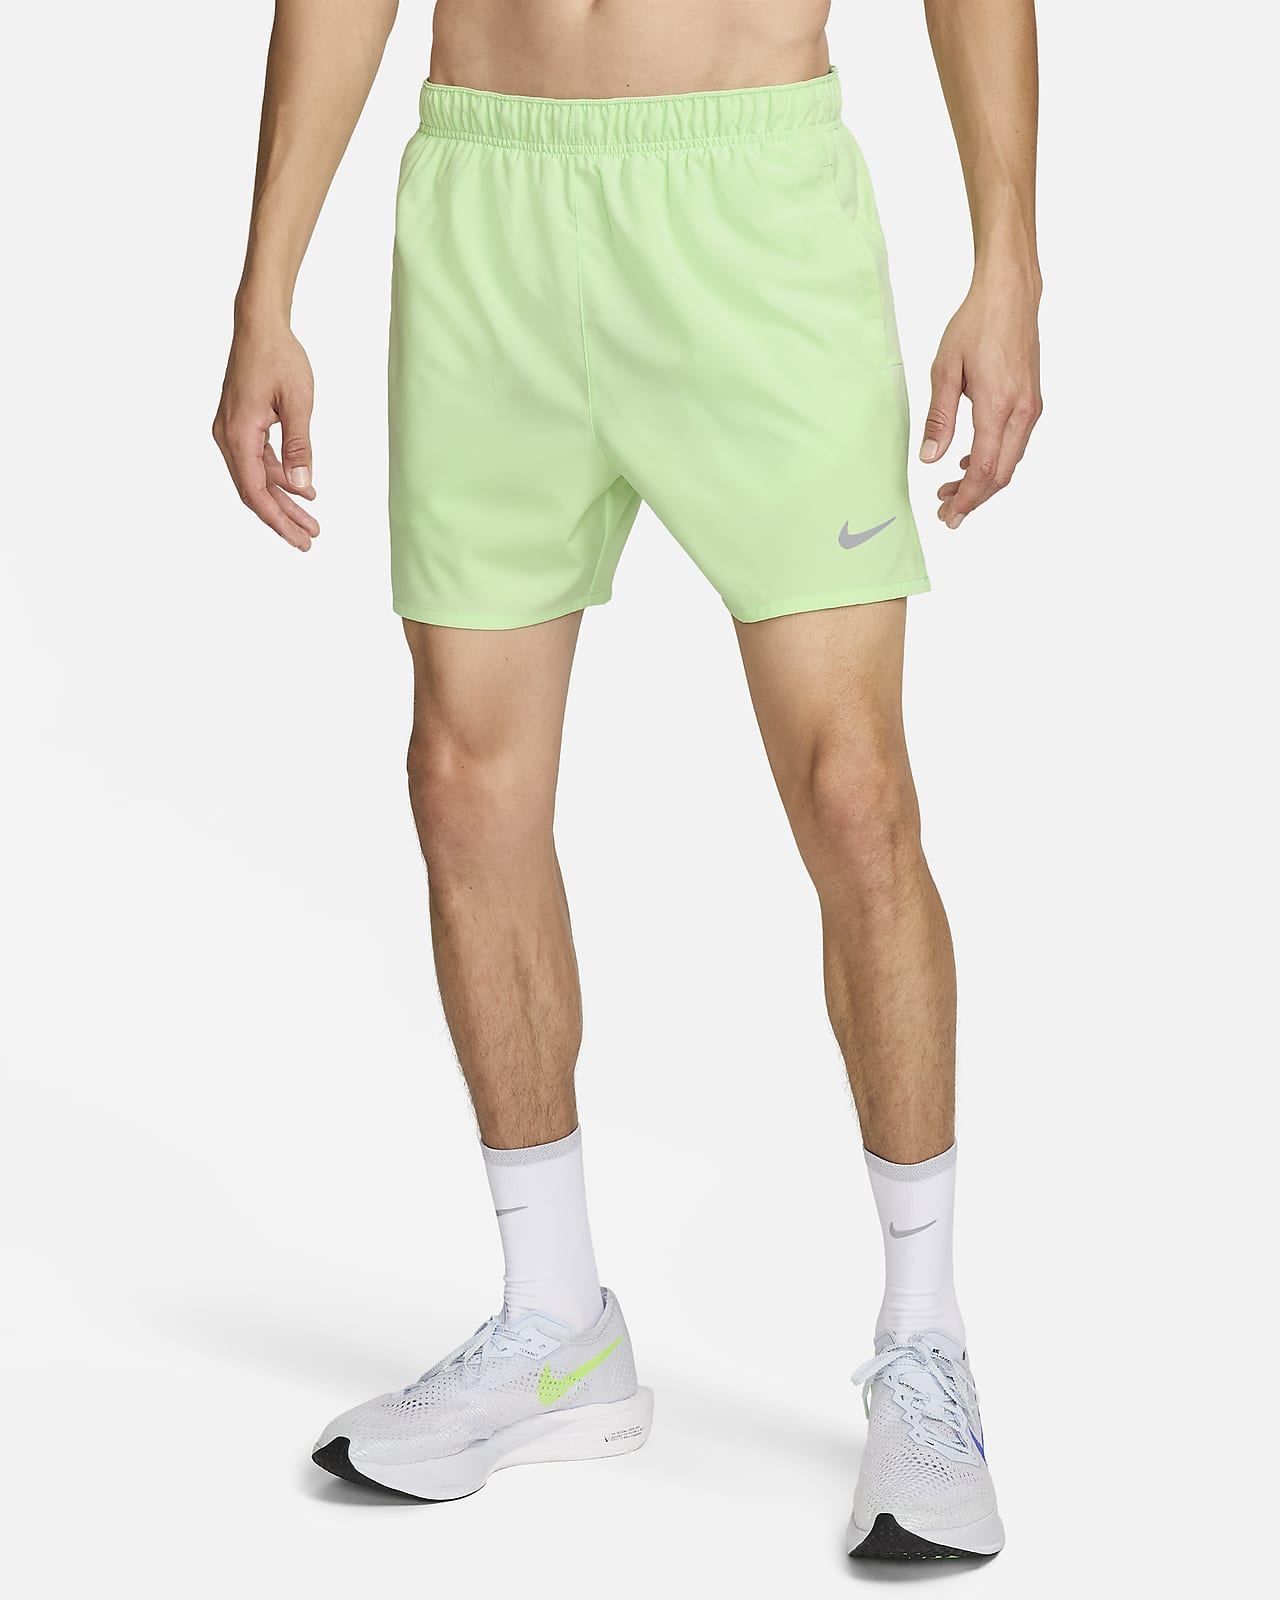 Shorts de running con forro de ropa interior Dri-FIT de 13 cm para hombre Nike Challenger